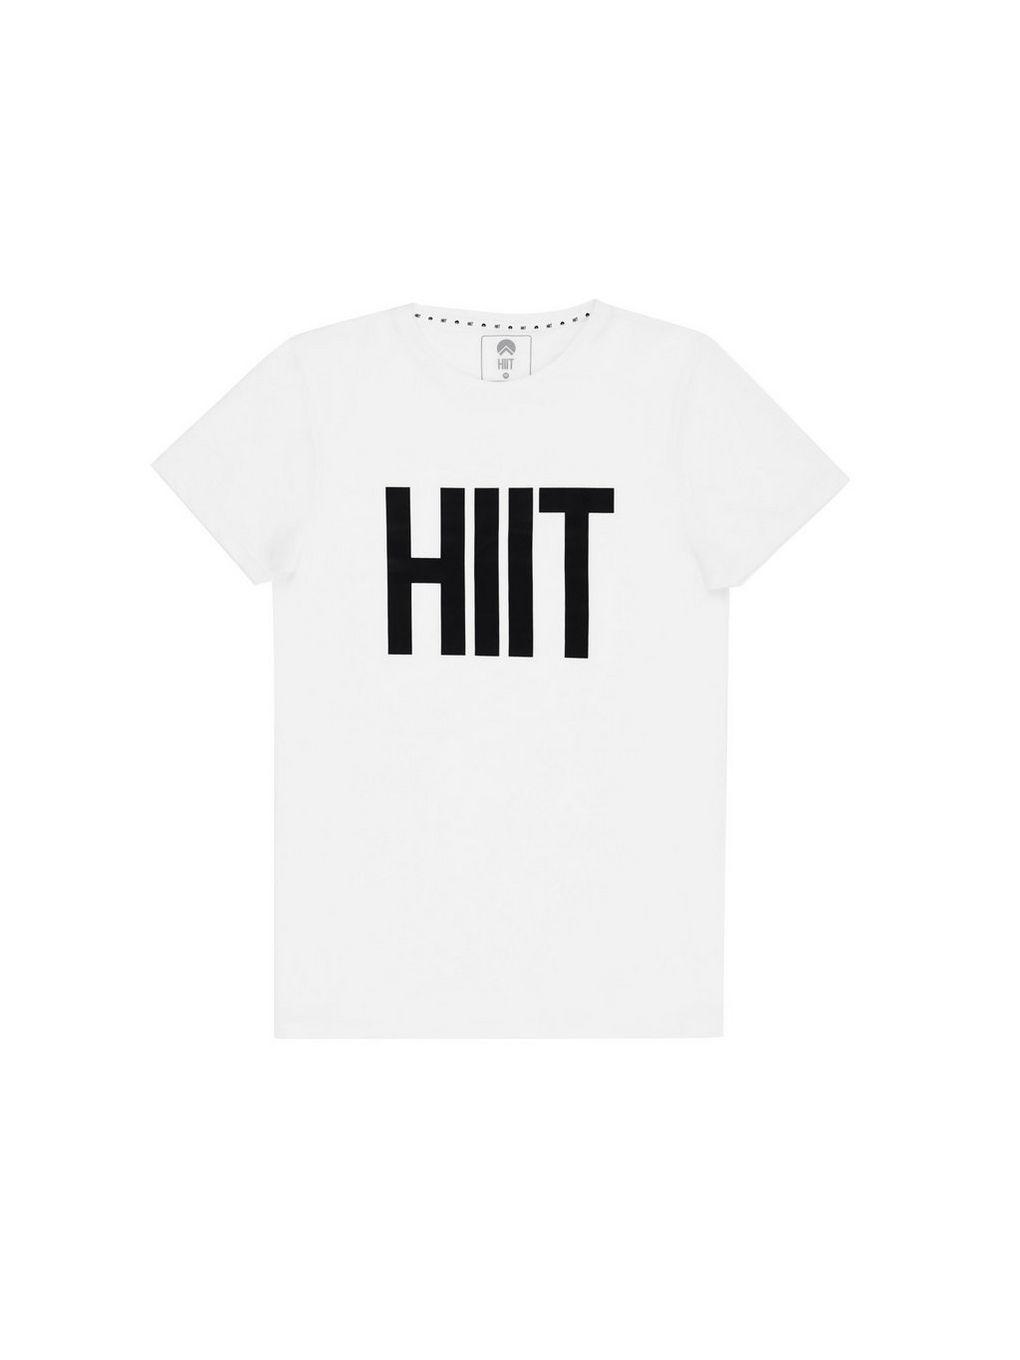 BR Clothing Logo - HIIT White Logo T Shirt Shirts & Vests